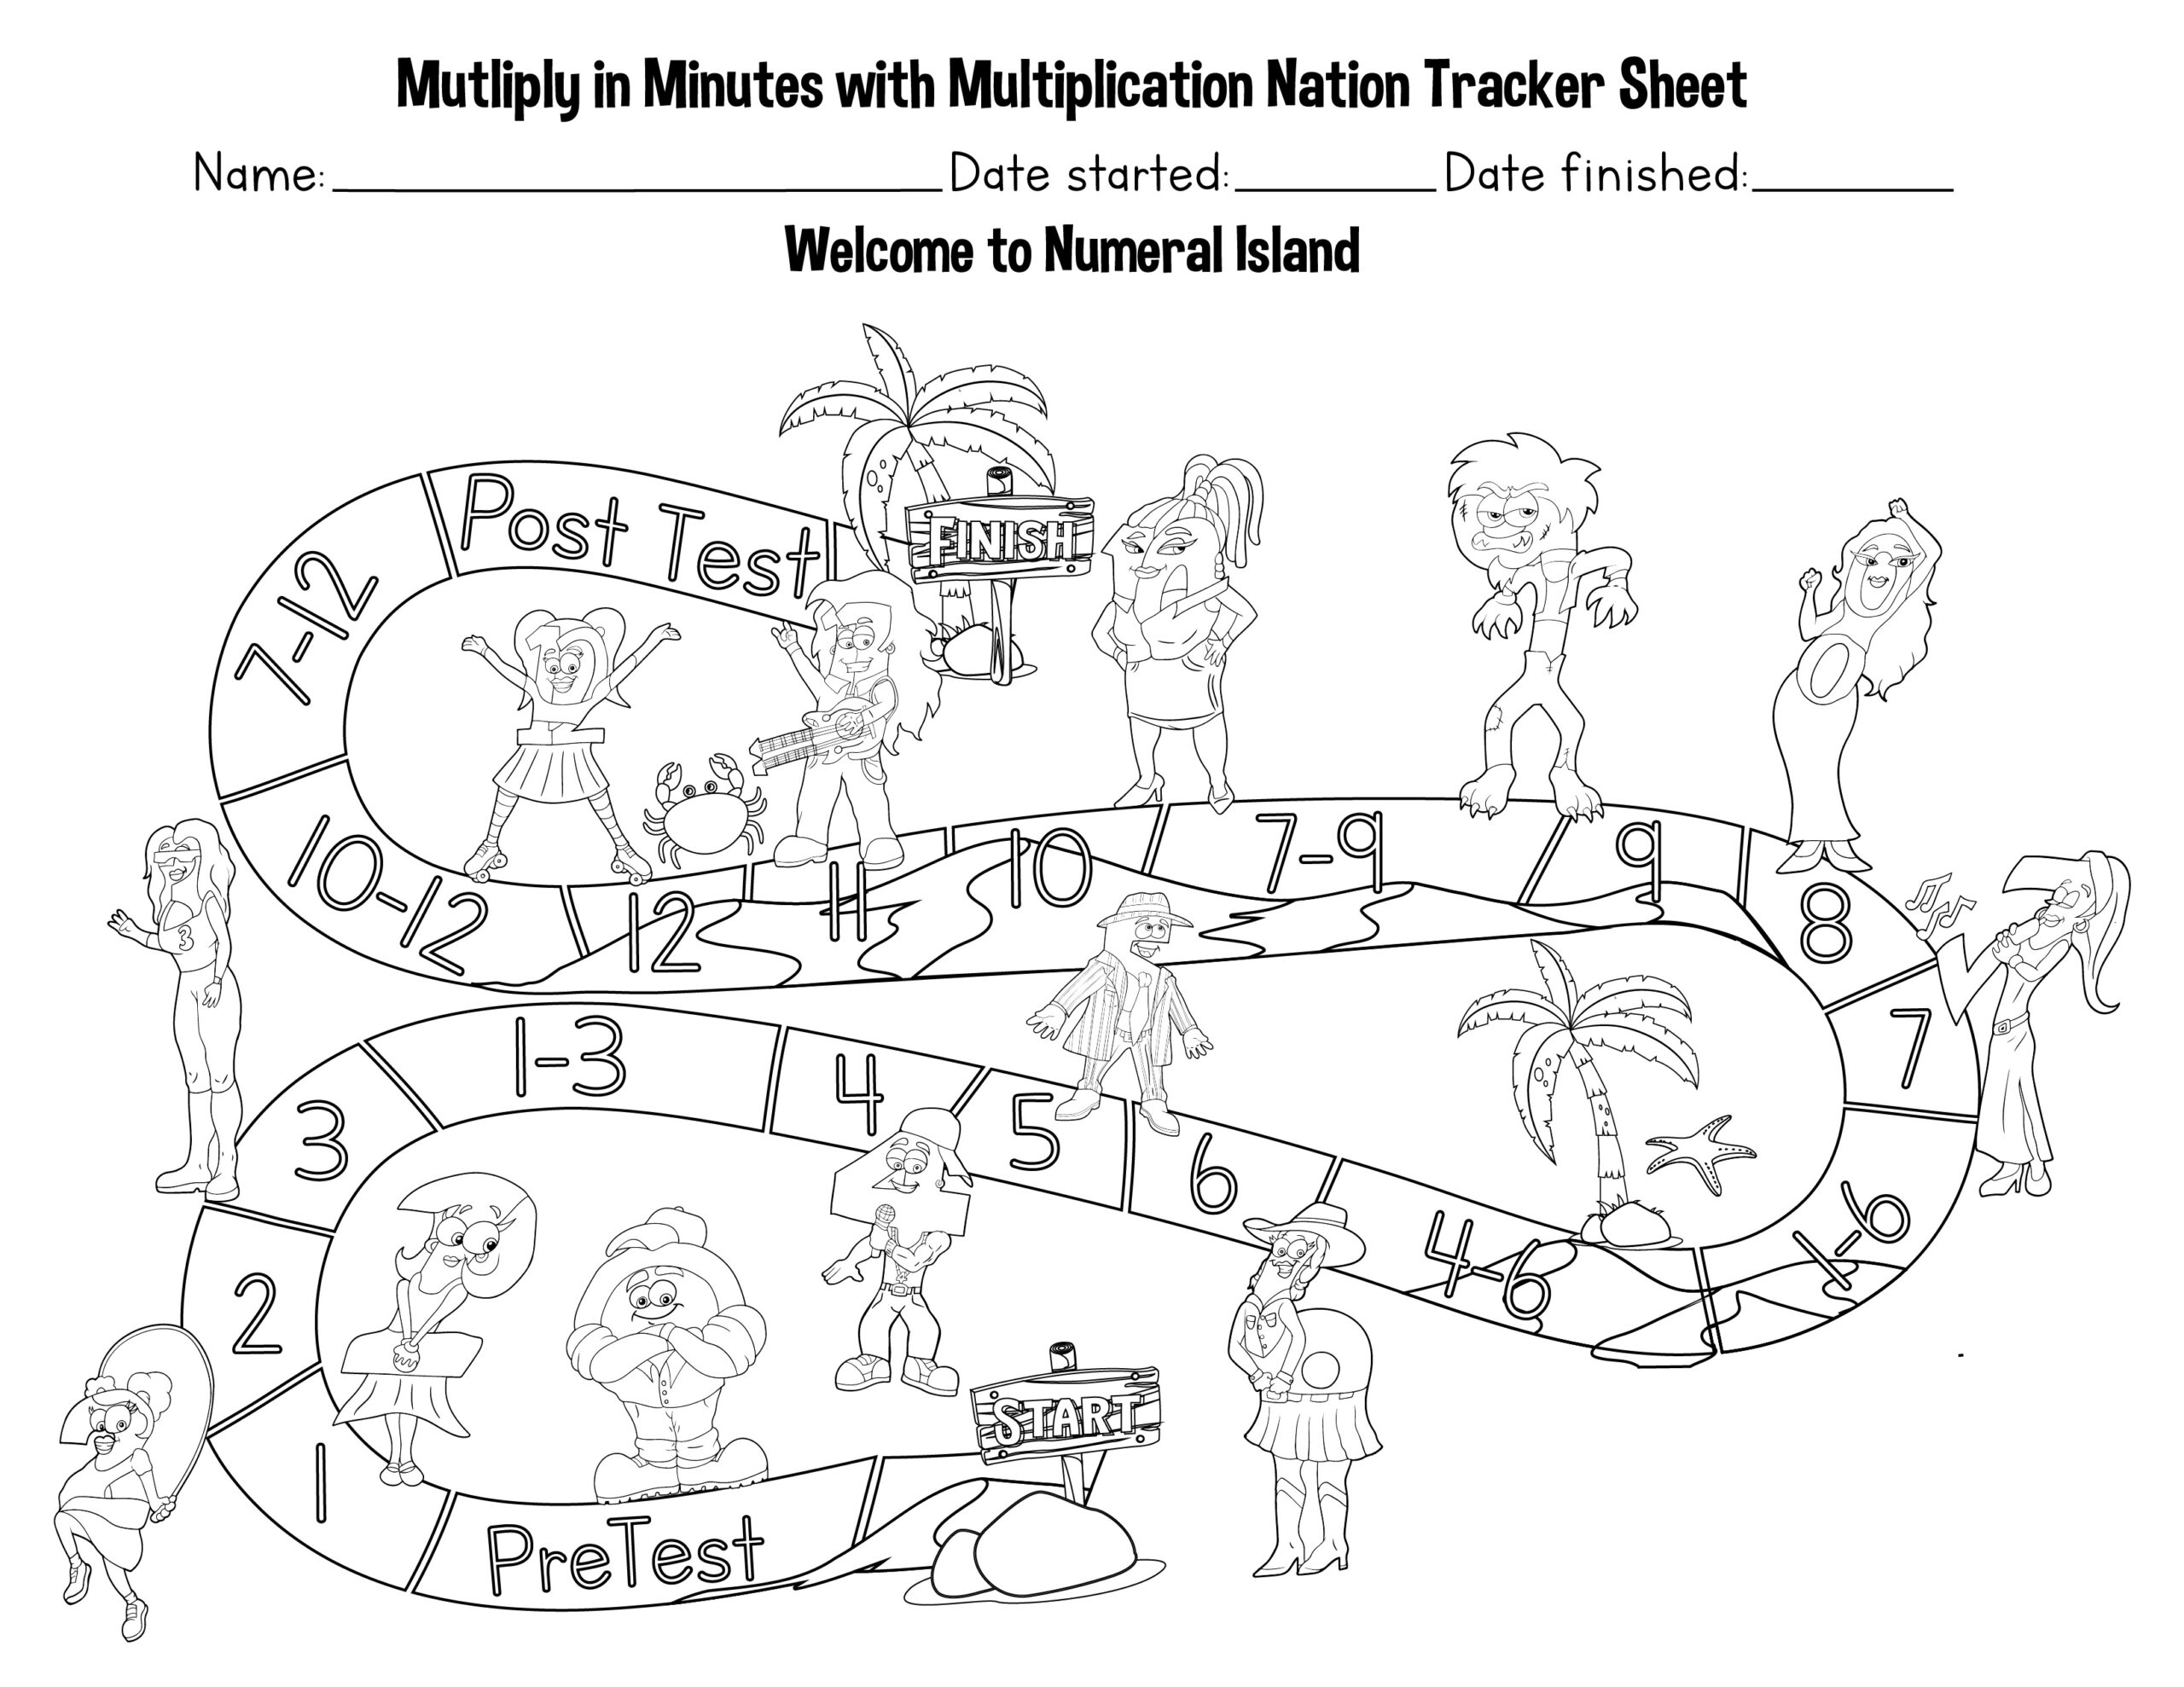 Multipication Tracking Sheet